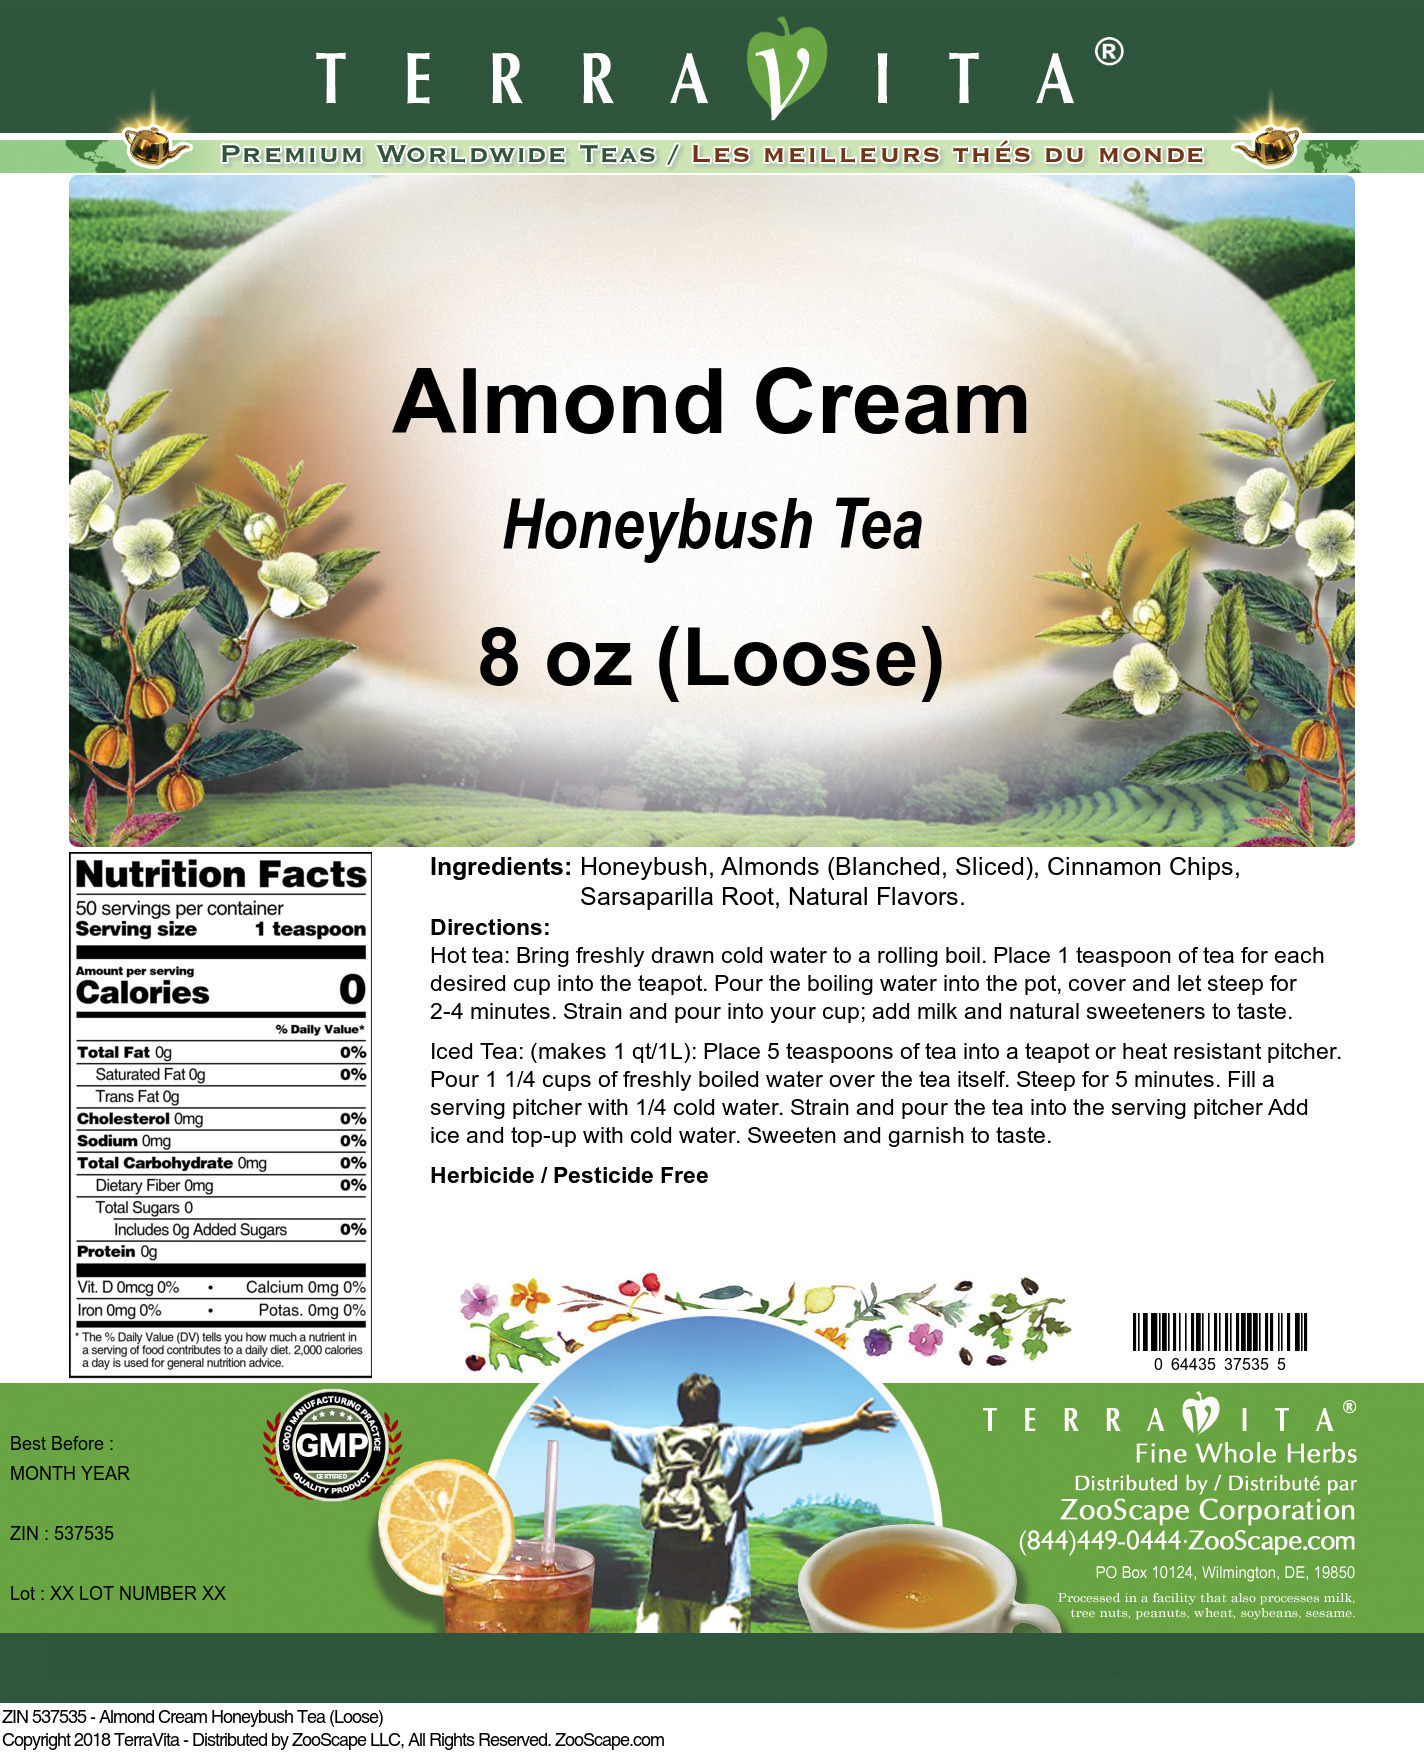 Almond Cream Honeybush Tea (Loose) - Label